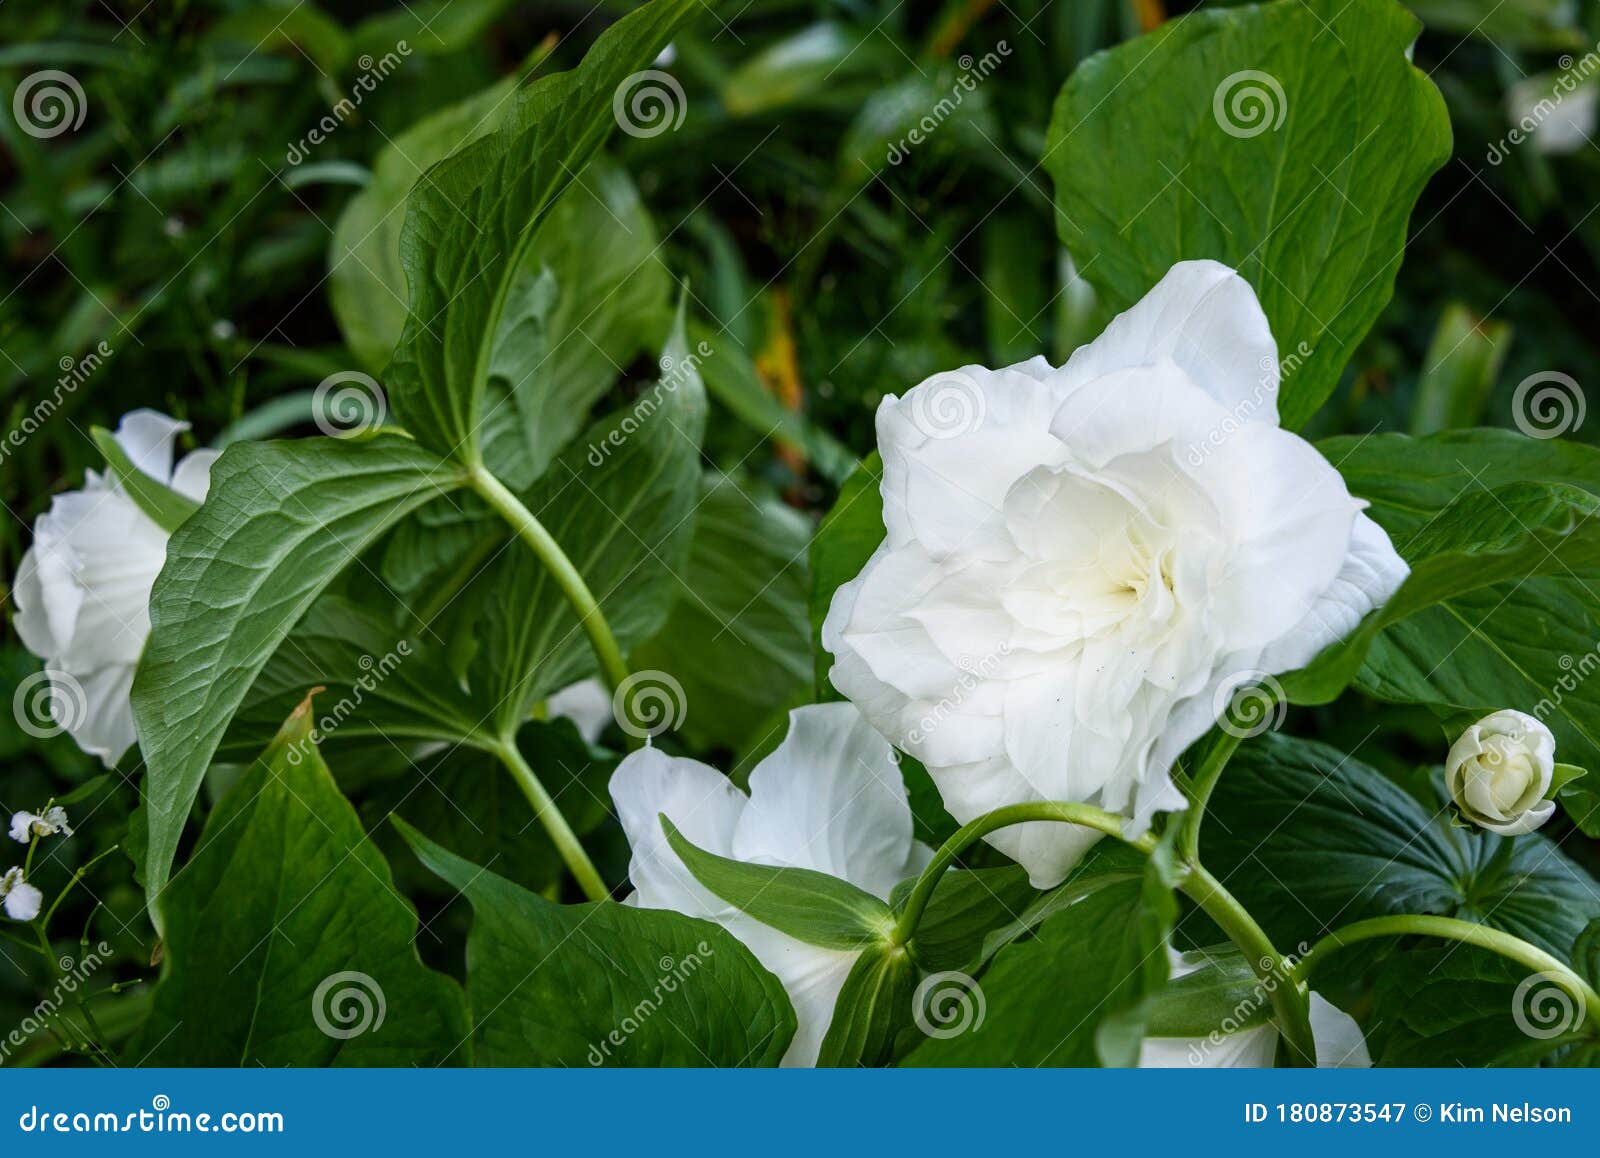 great white trillium, trillium grandiflorum `flore pleno`, blooming in a garden